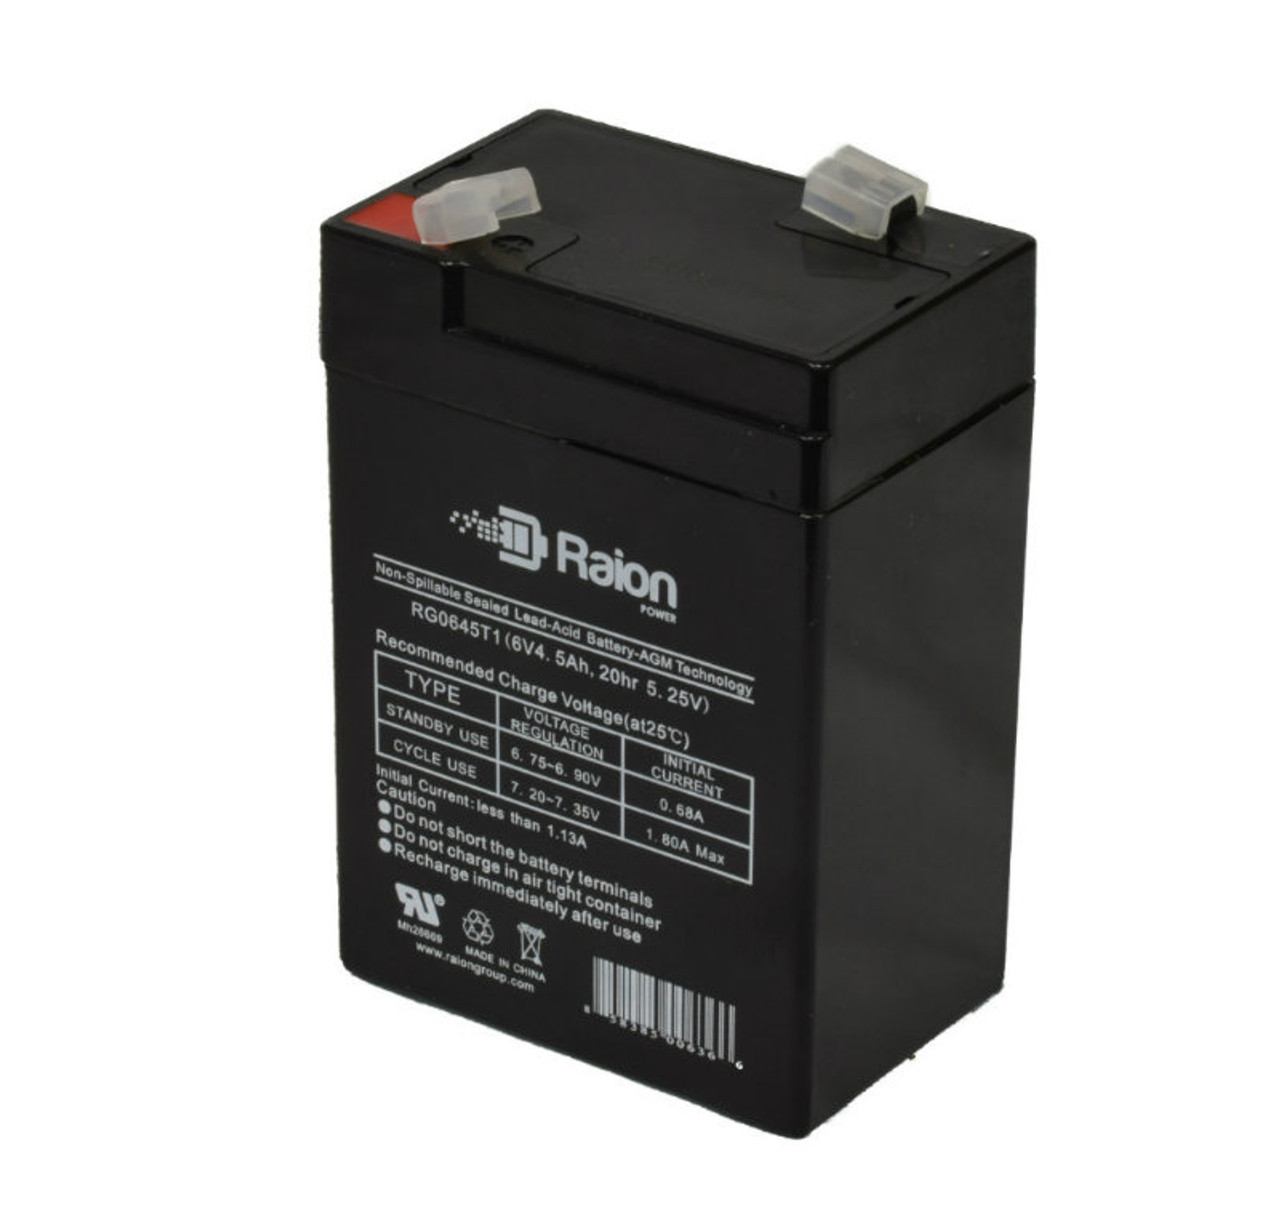 Raion Power RG0645T1 6V 4.5Ah Replacement Battery Cartridge for Abbott Laboratories Enteral Pump